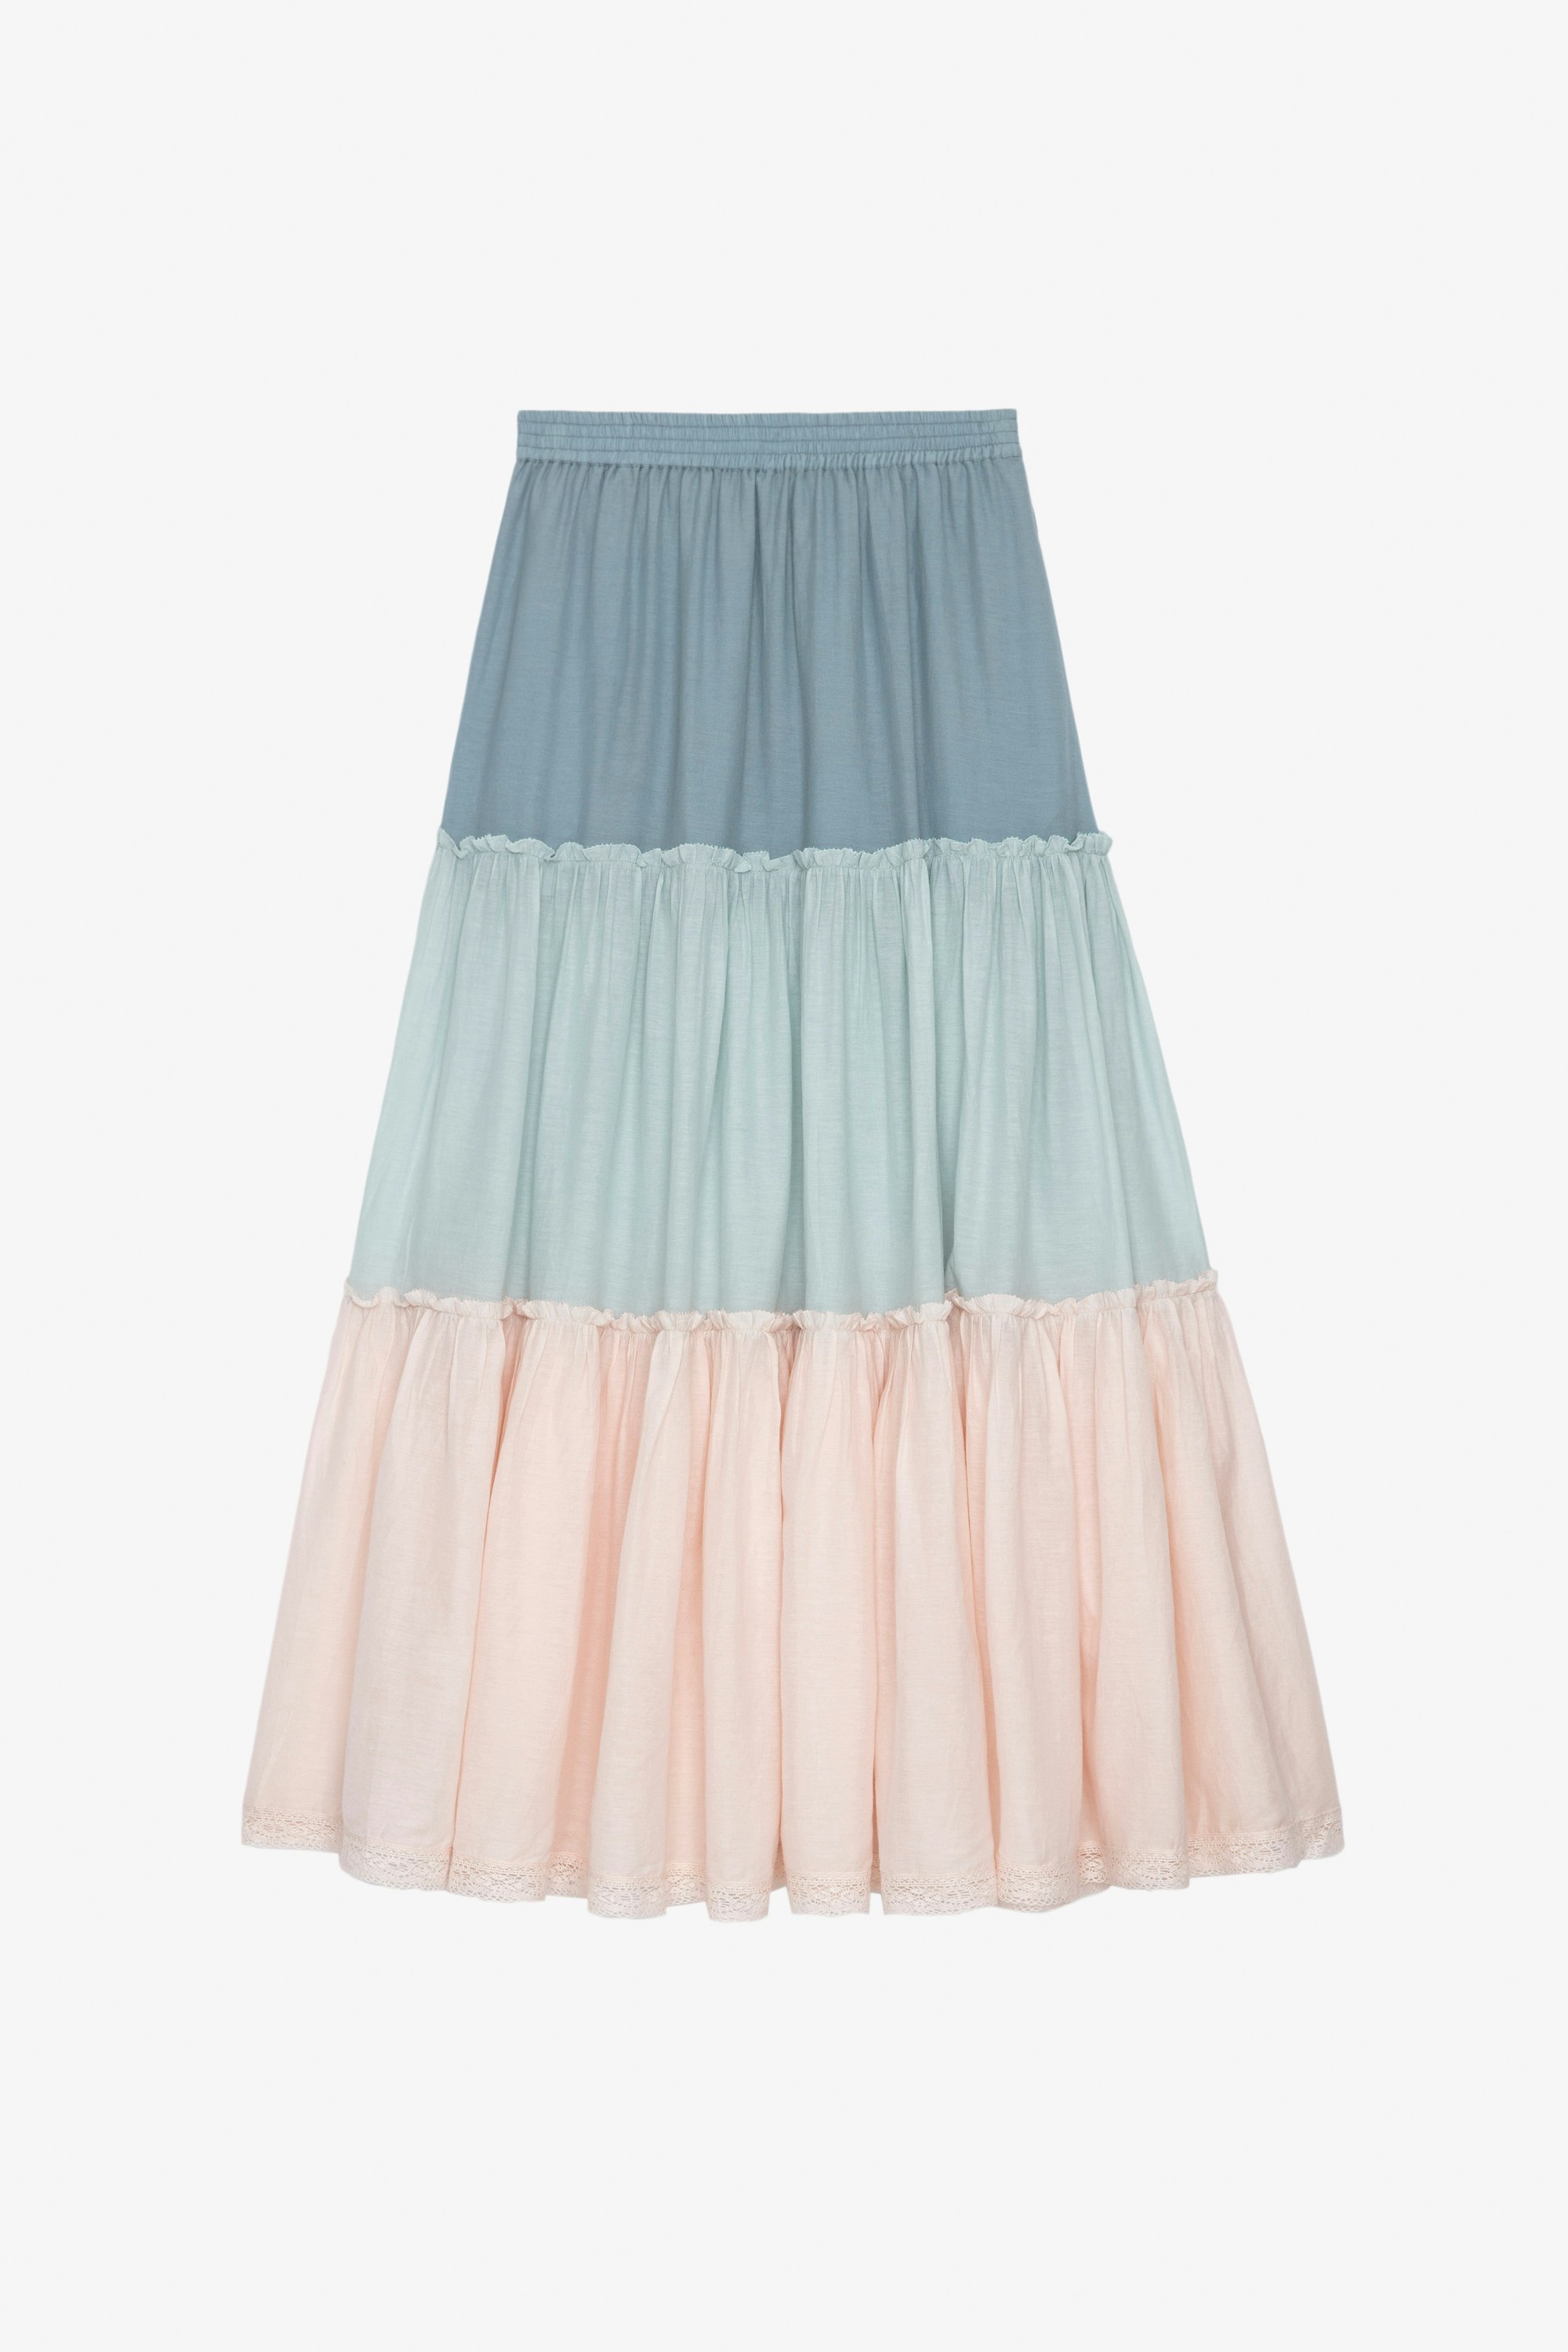 Jovela Skirt Women's long multi-coloured flared cotton skirt with strips of lace